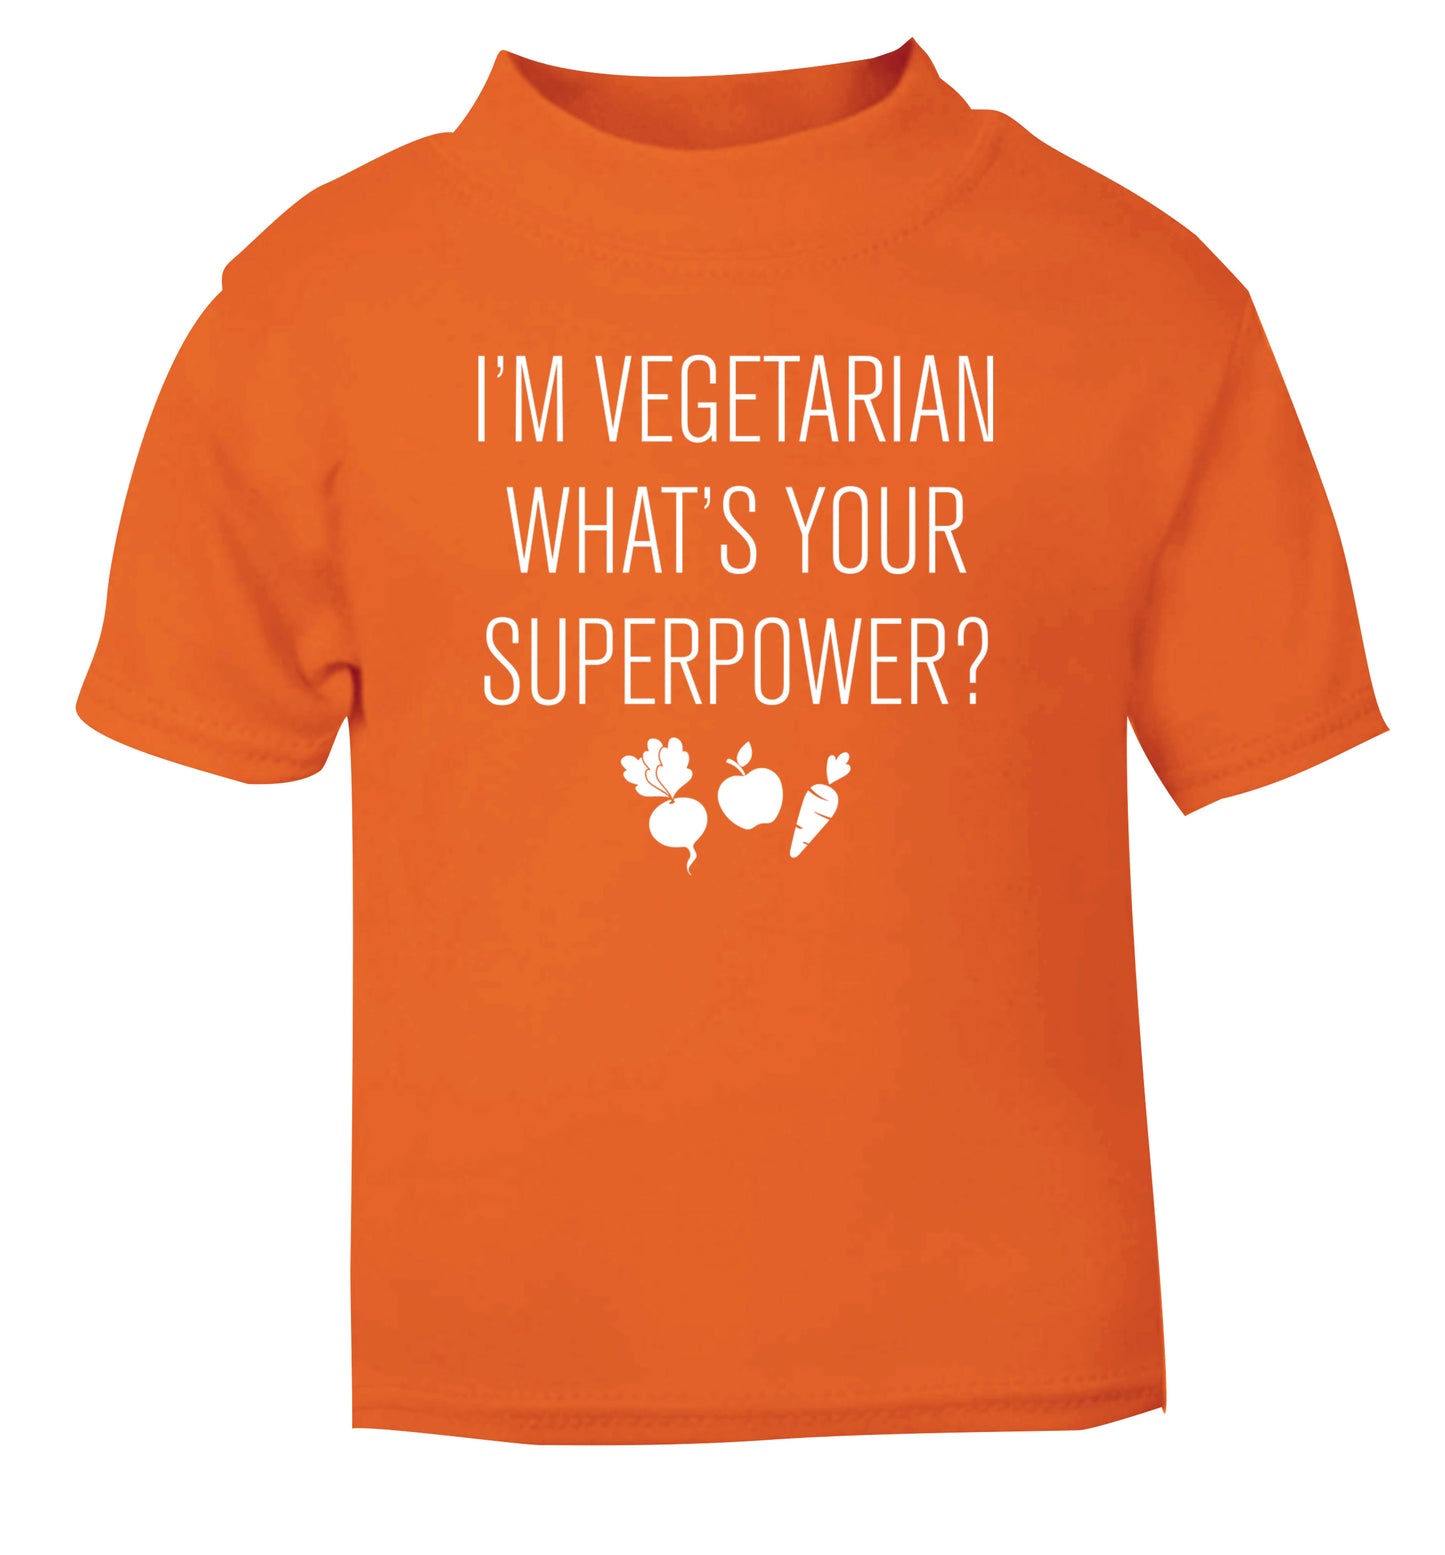 I'm vegetarian what's your superpower? orange Baby Toddler Tshirt 2 Years